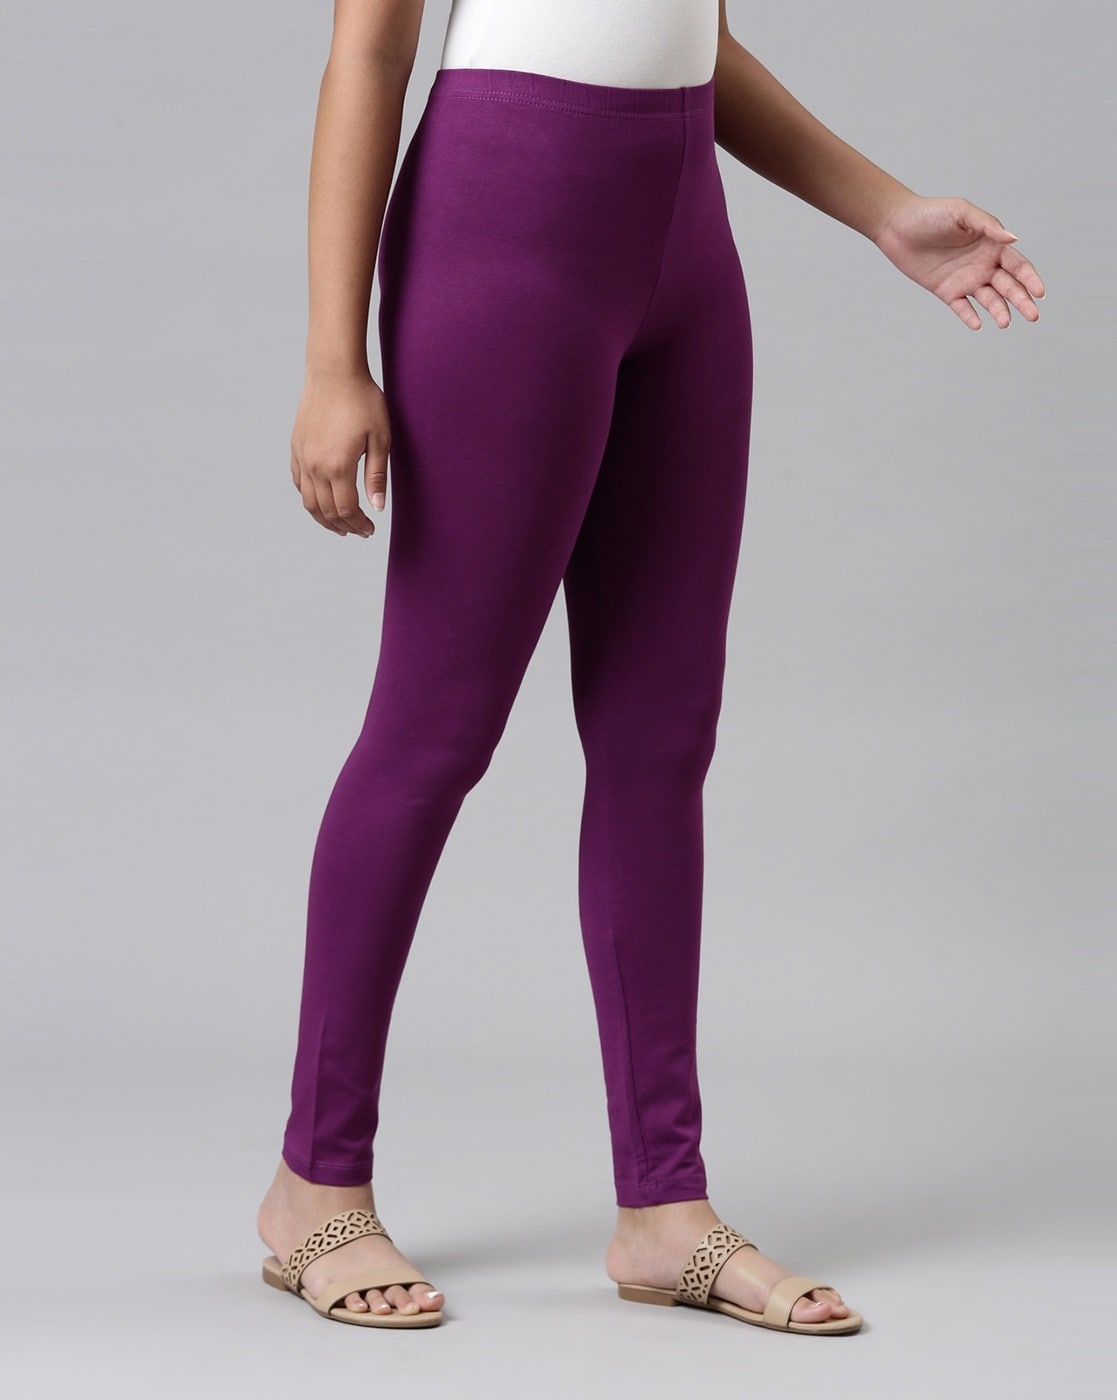 Buy Purple Leggings for Girls by Go Colors Online